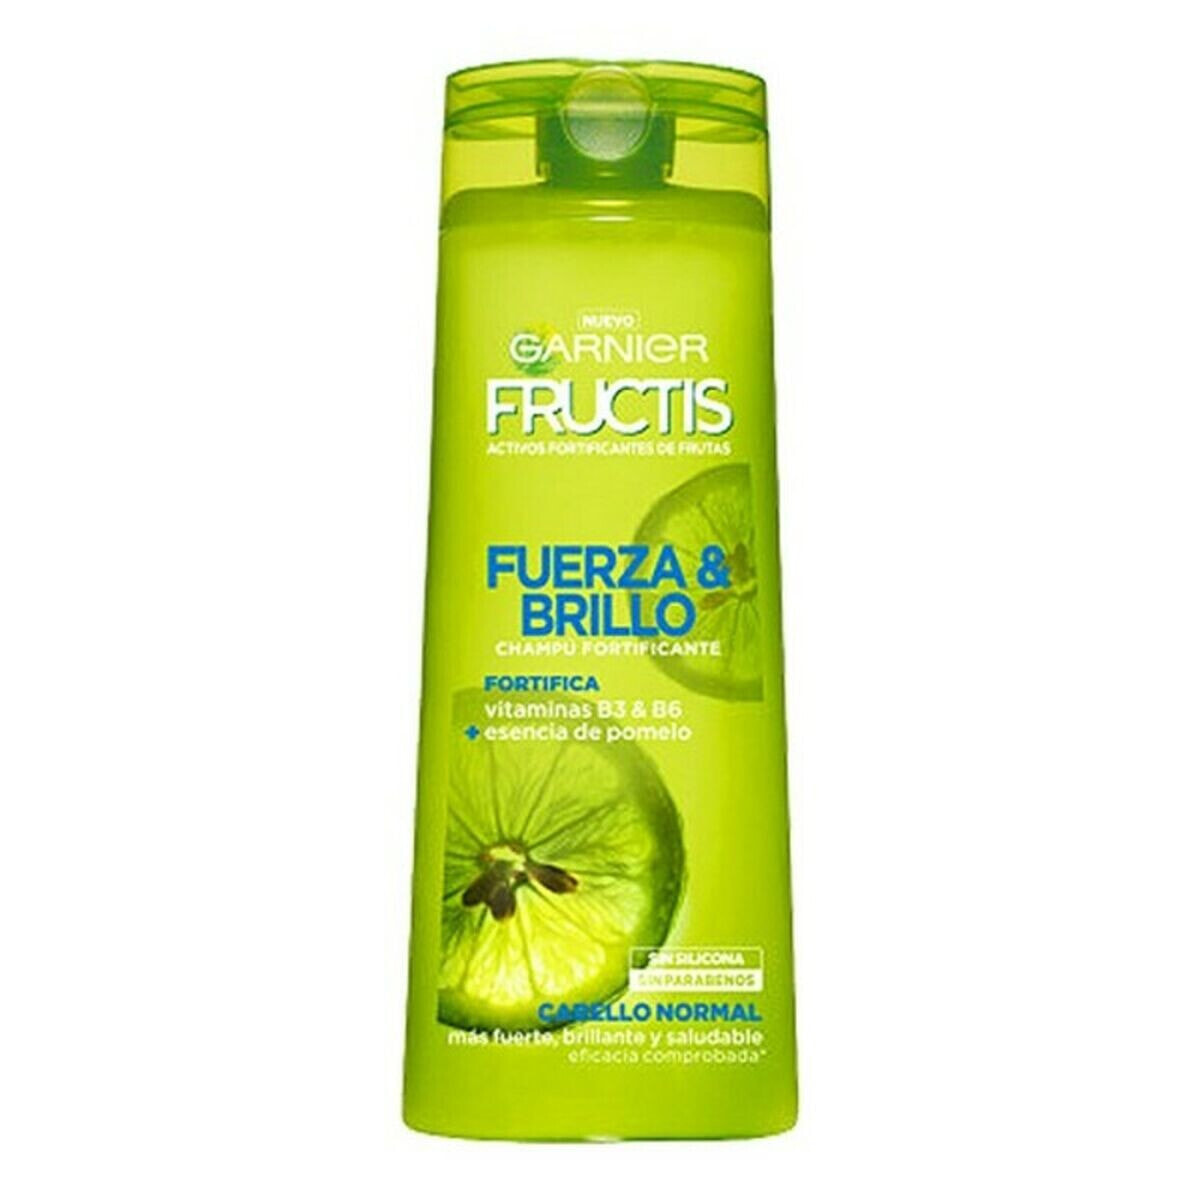 Укрепляющий шампунь Fructis Fuerza & Brillo Garnier Fructis (360 ml) 360 ml